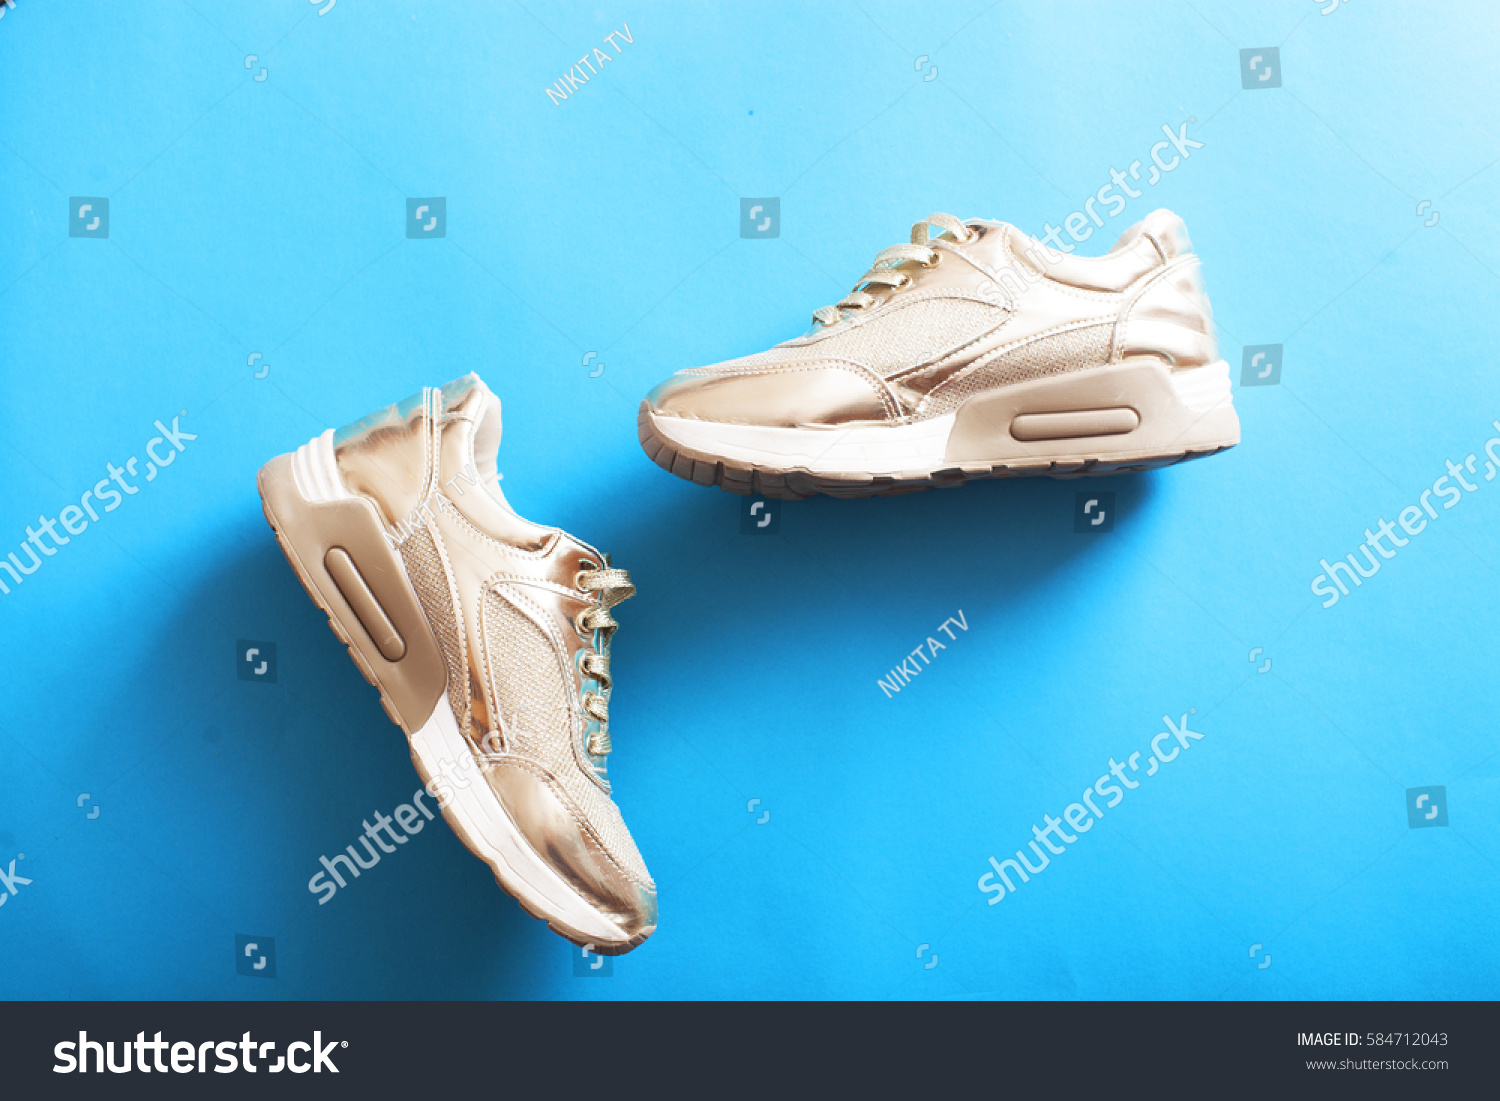 toning athletic shoes